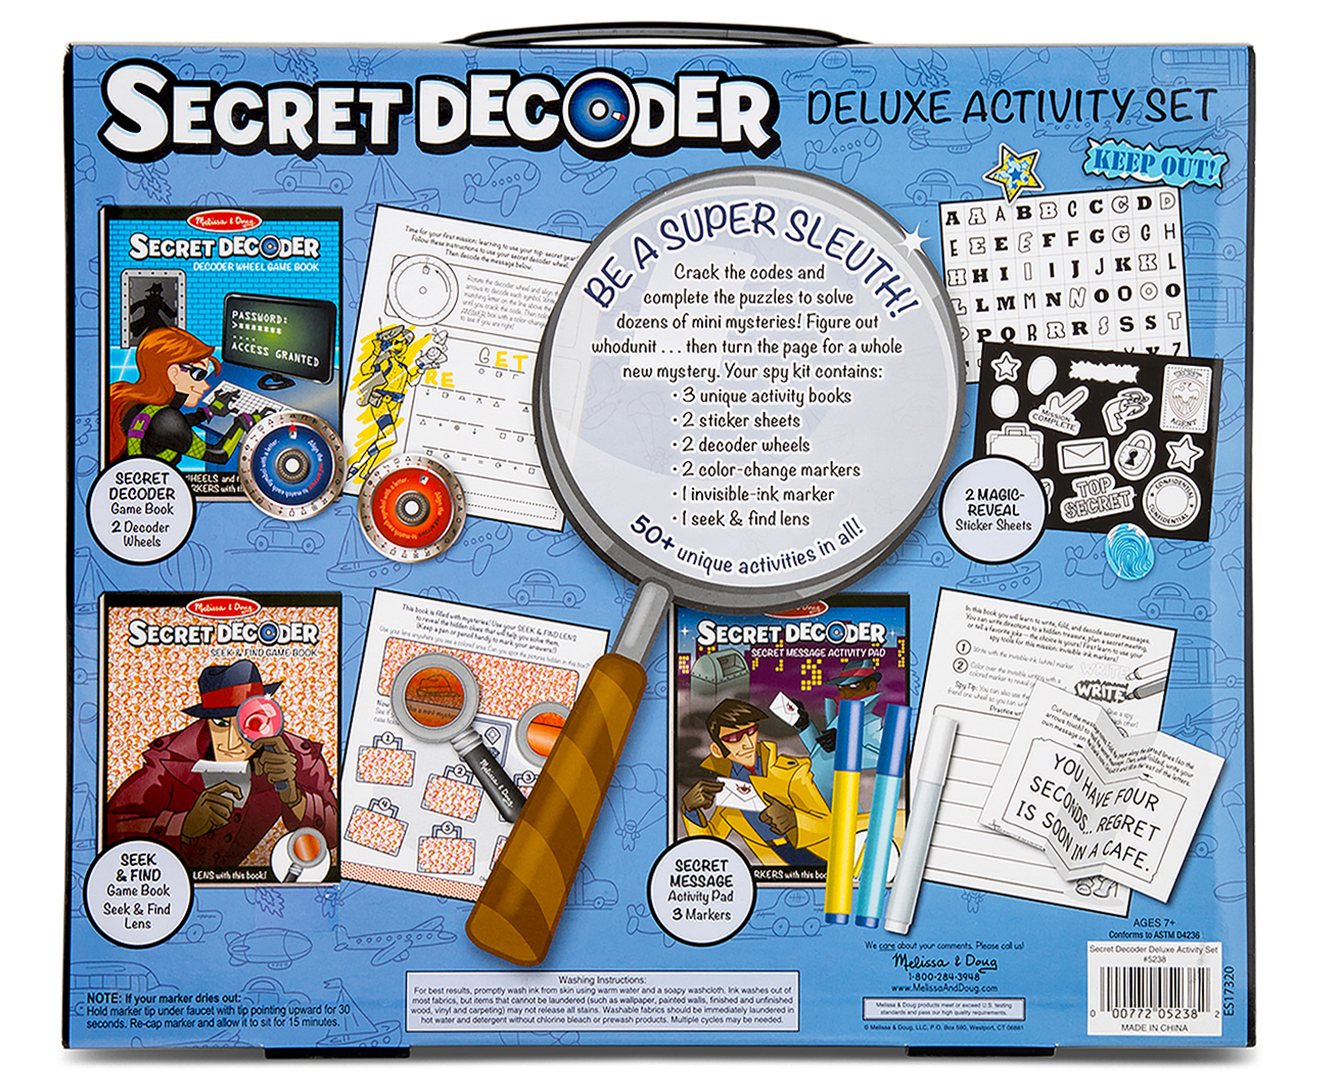 Secret Decoder Deluxe Activity Set - ON the GO